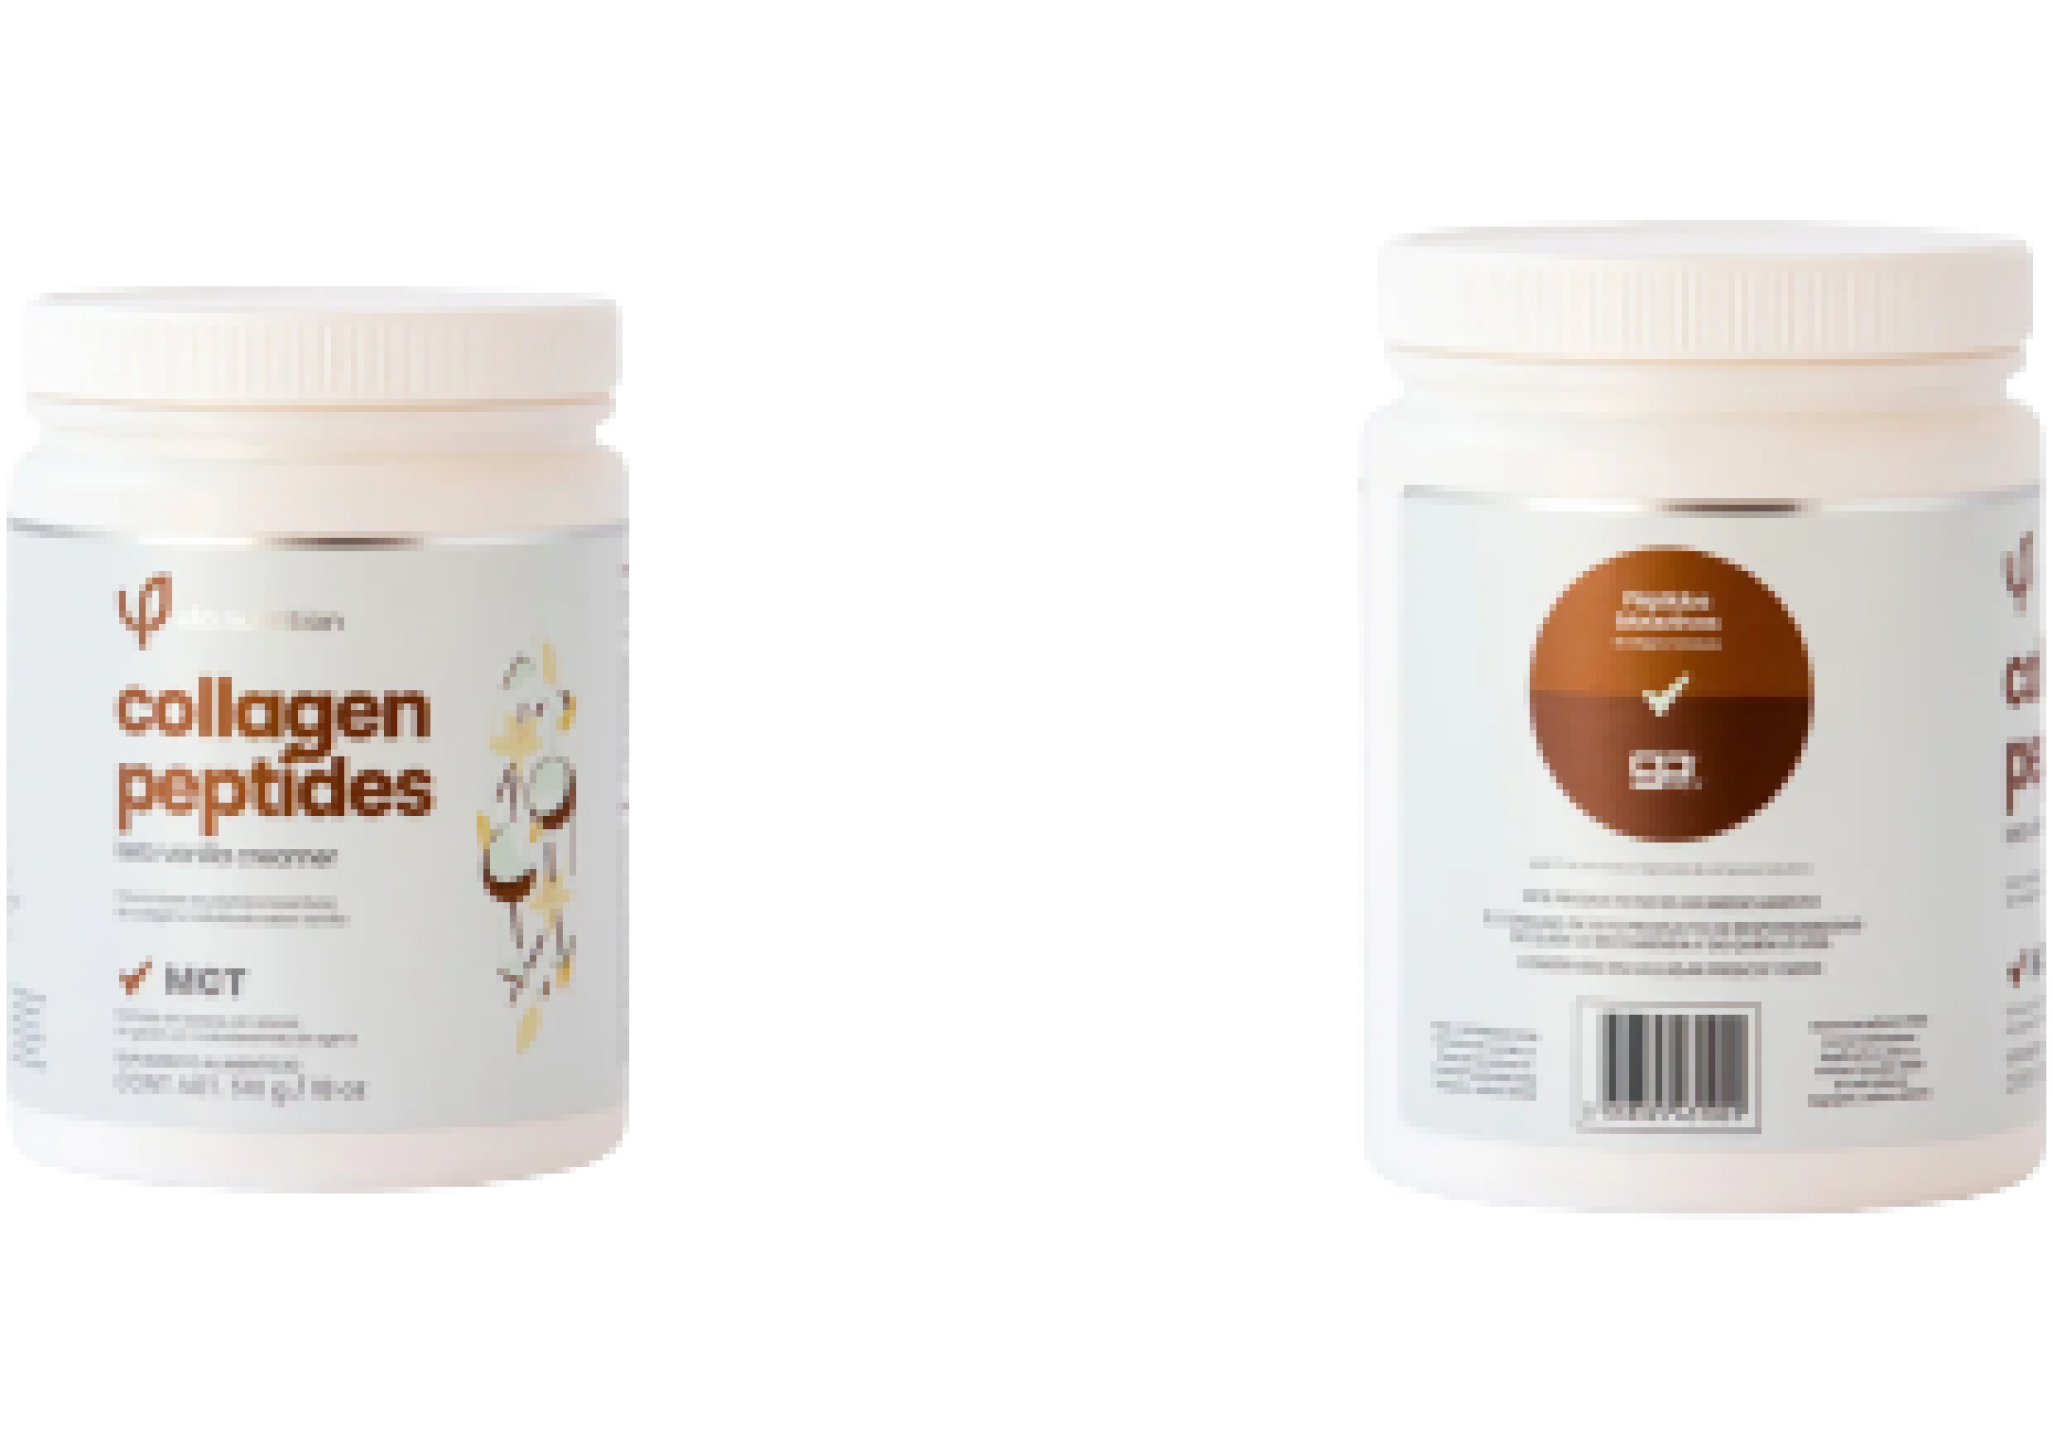 Collagen Peptides Keto Vanilla Creamer -LIFE-